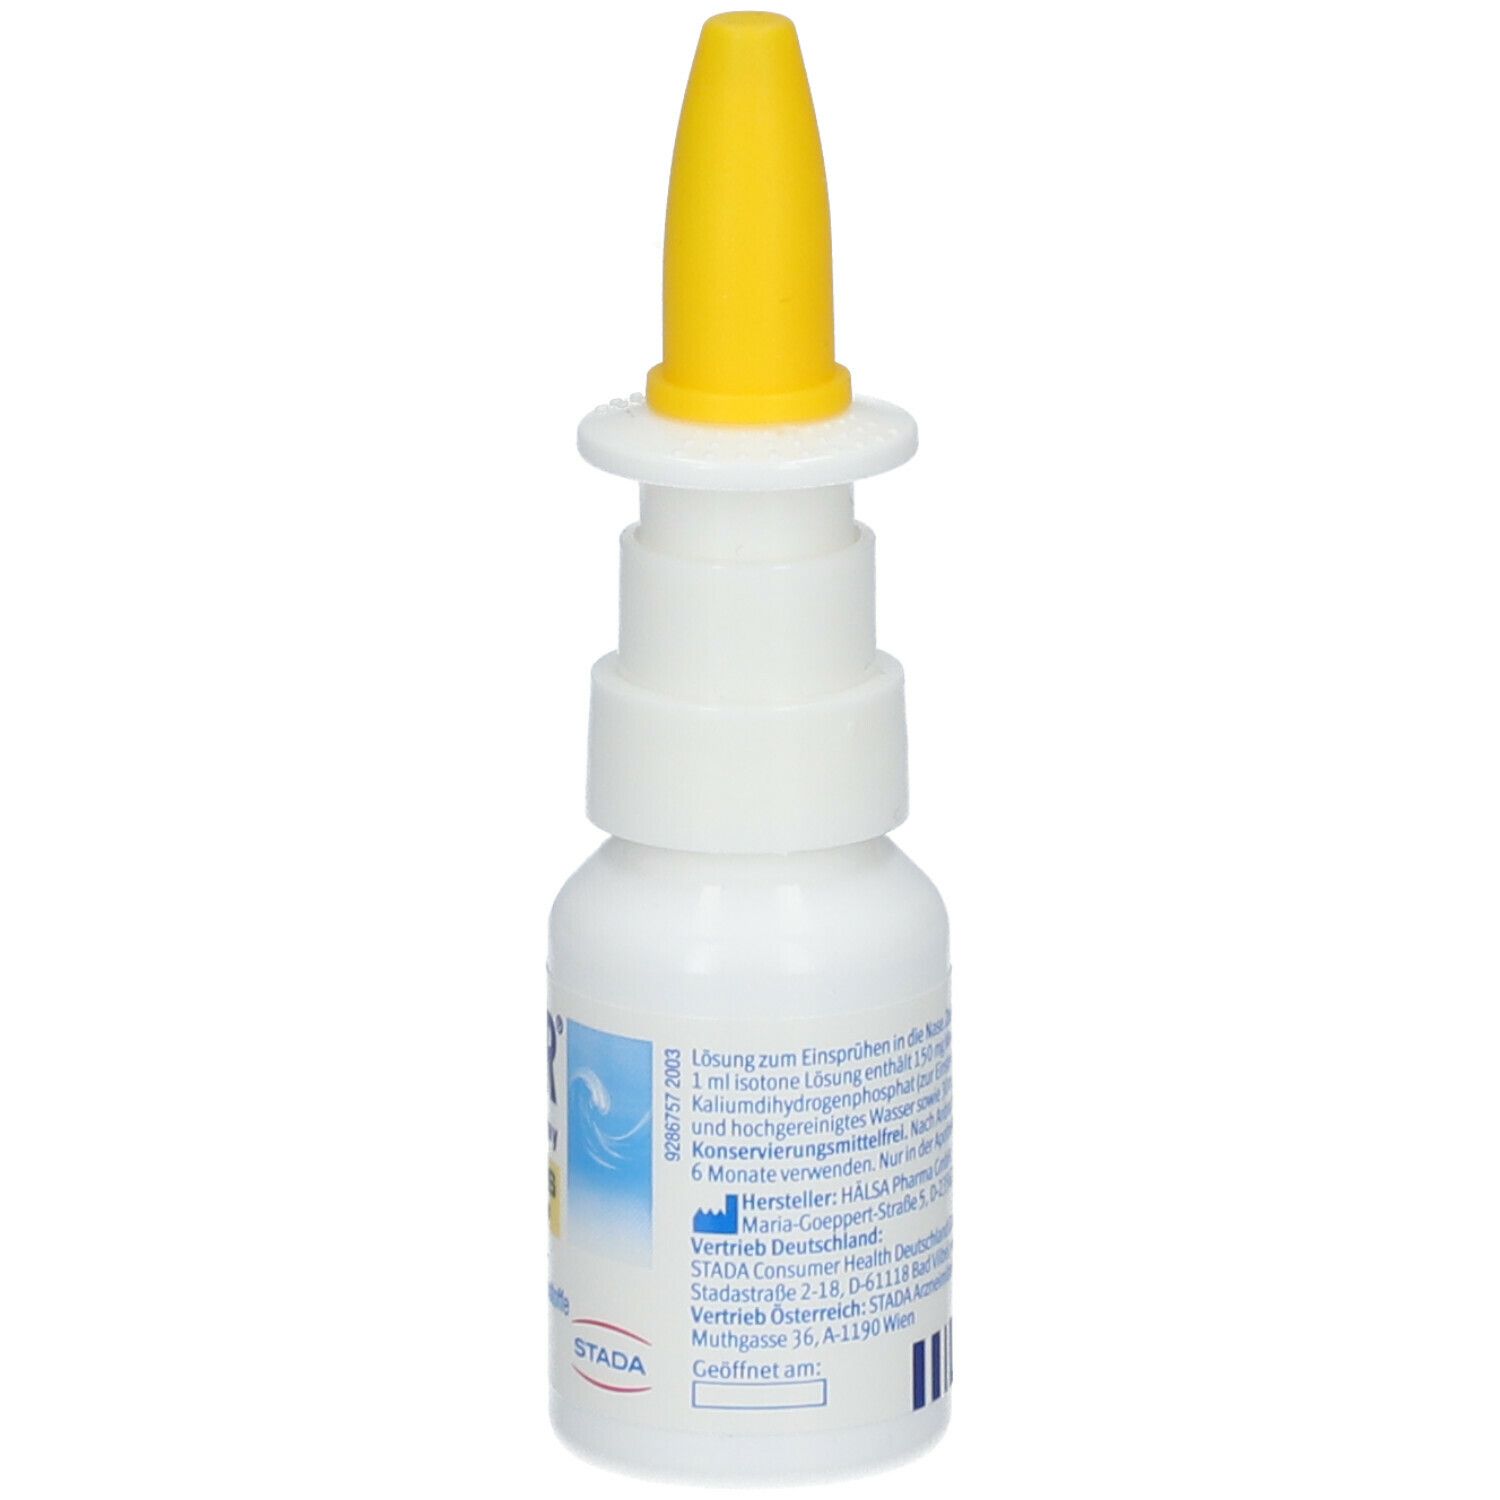 MAR® Nasenspray Plus Pflege Meerwasser-Nasenspray mit Dexpanthenol